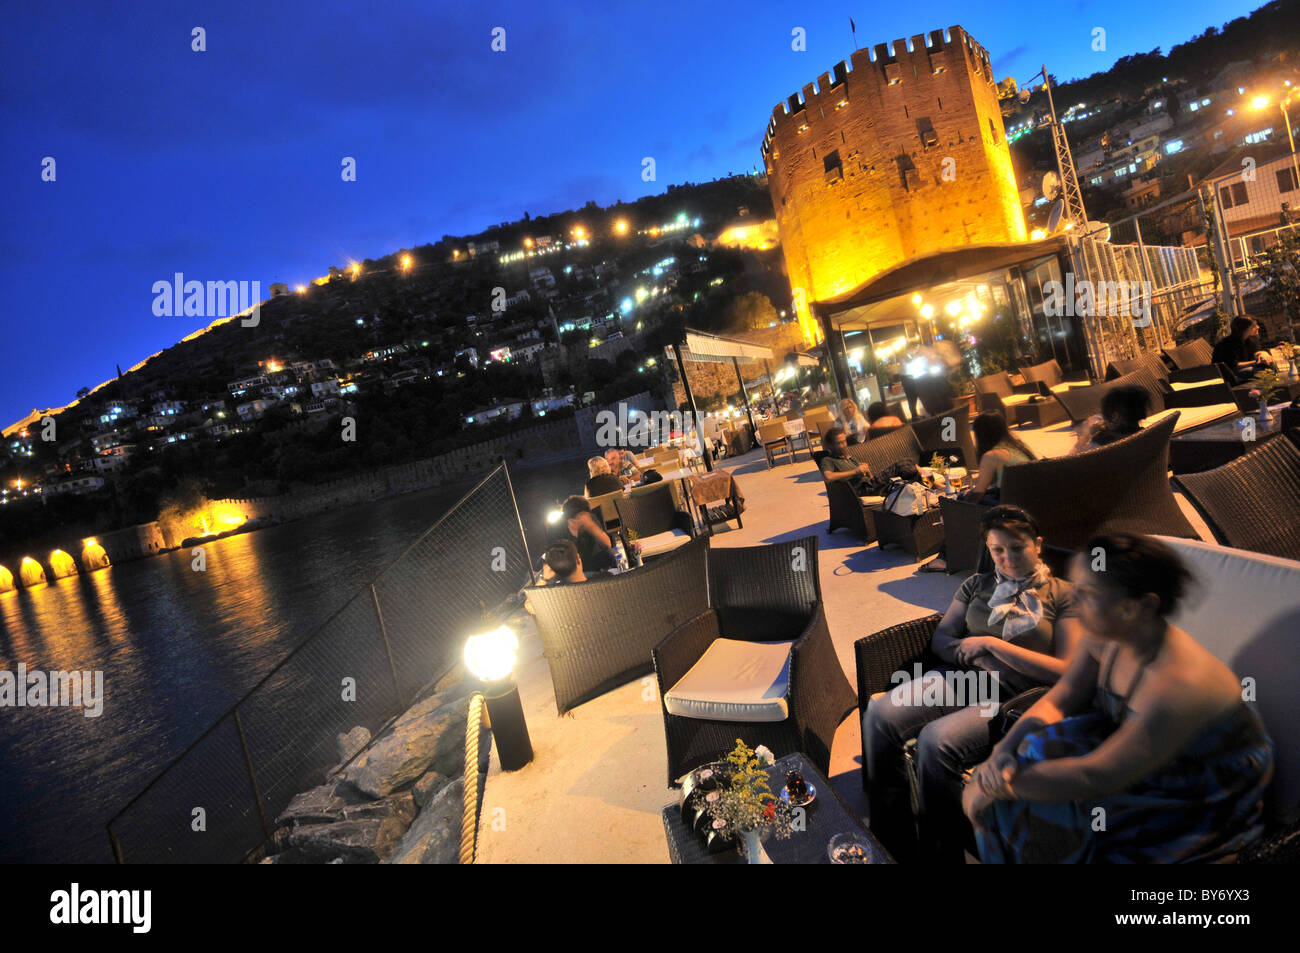 Cafe near the tower of Kizil Kule in the harbourin the evening, Alanya, south coast, Anatolia, Turkey Stock Photo